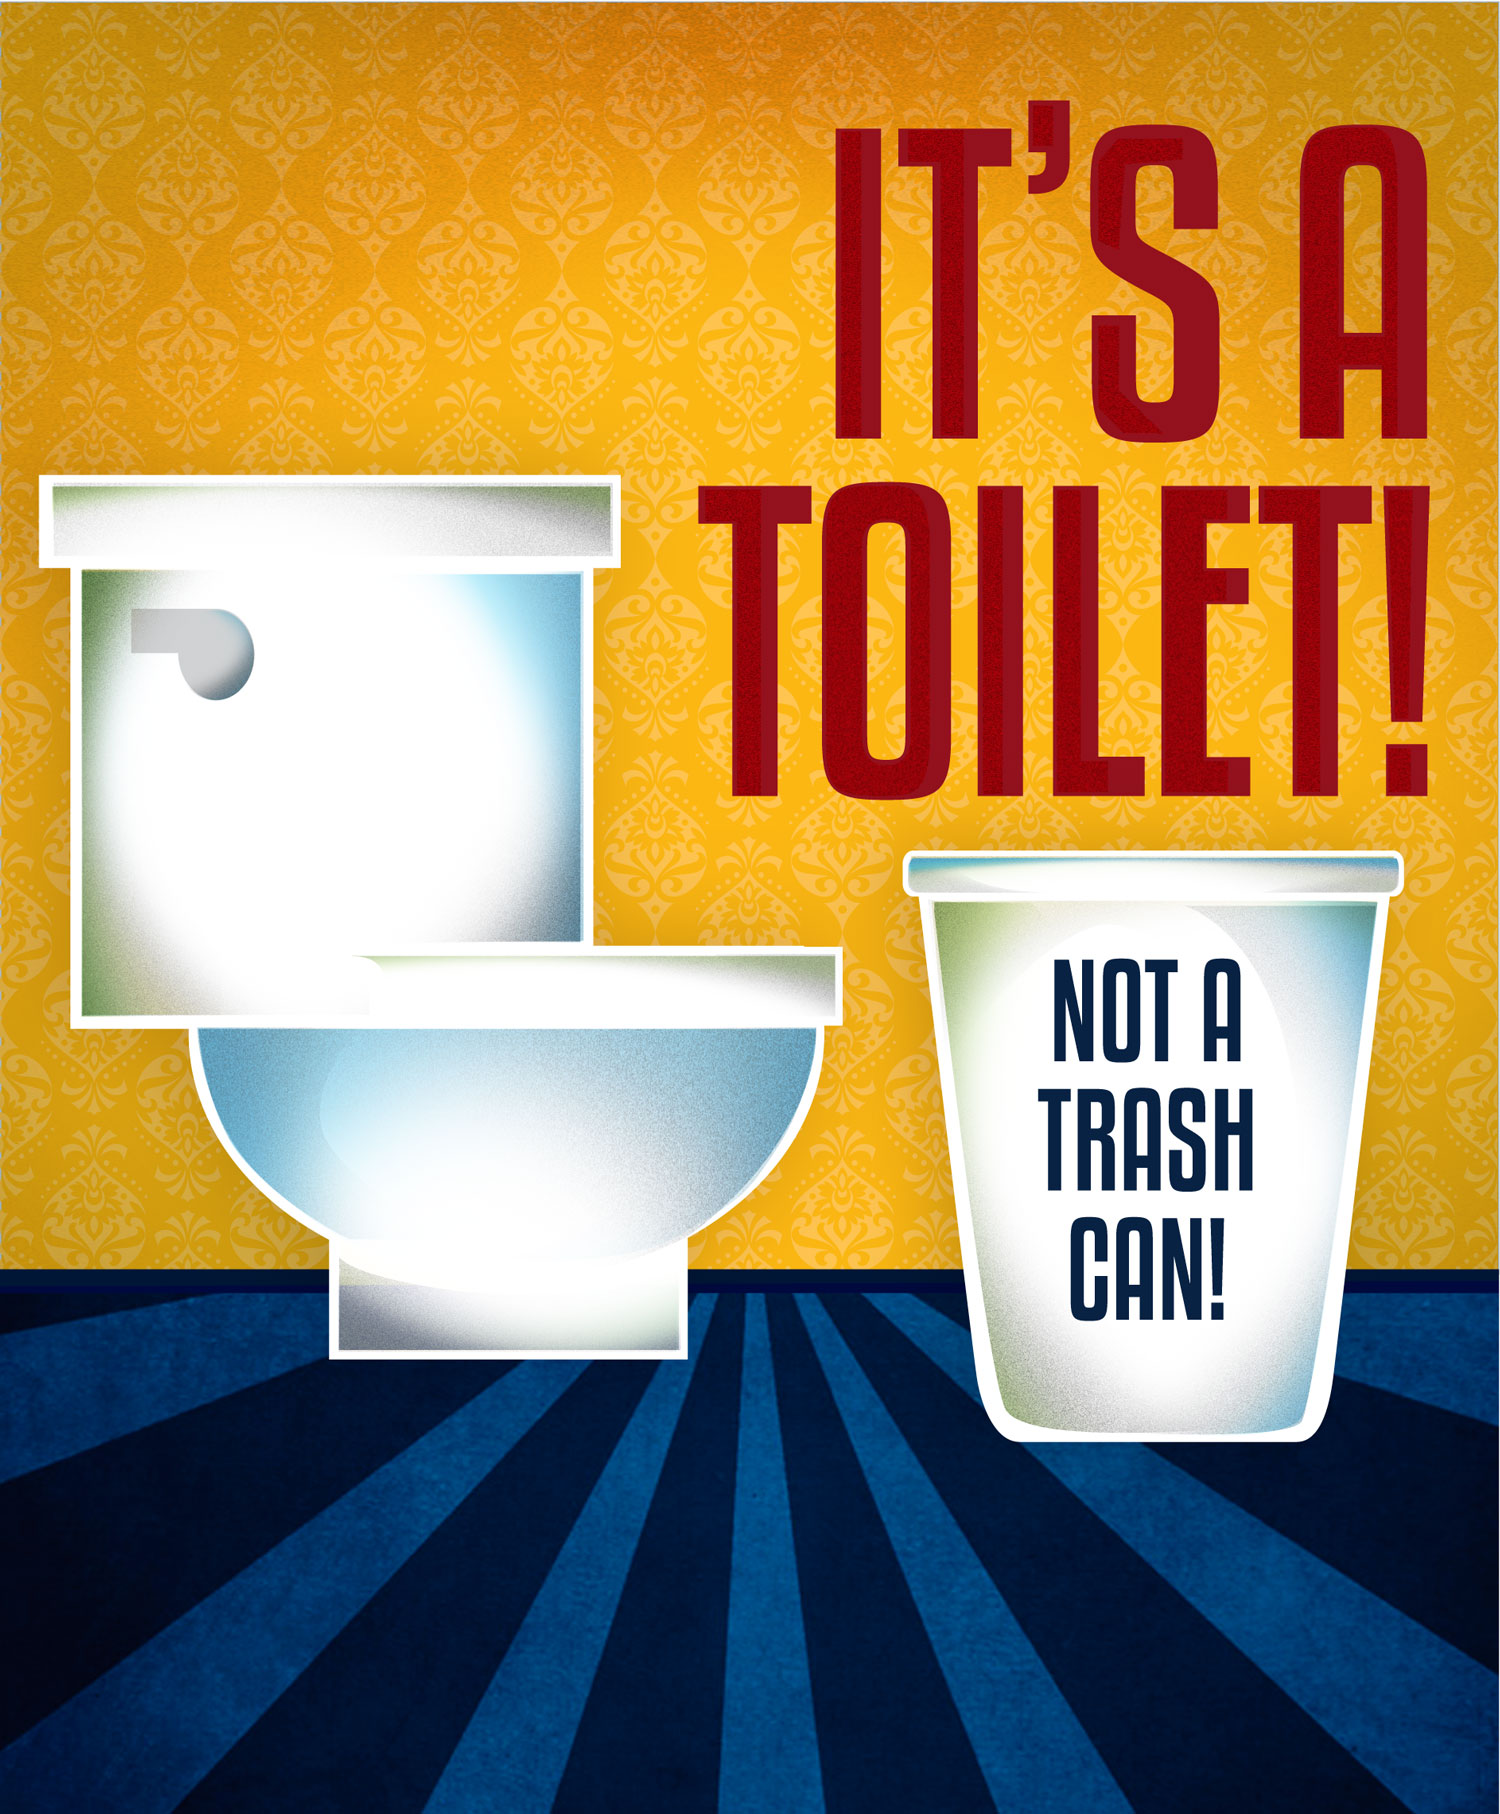 MWRA - It's a toilet, not a trashcan!